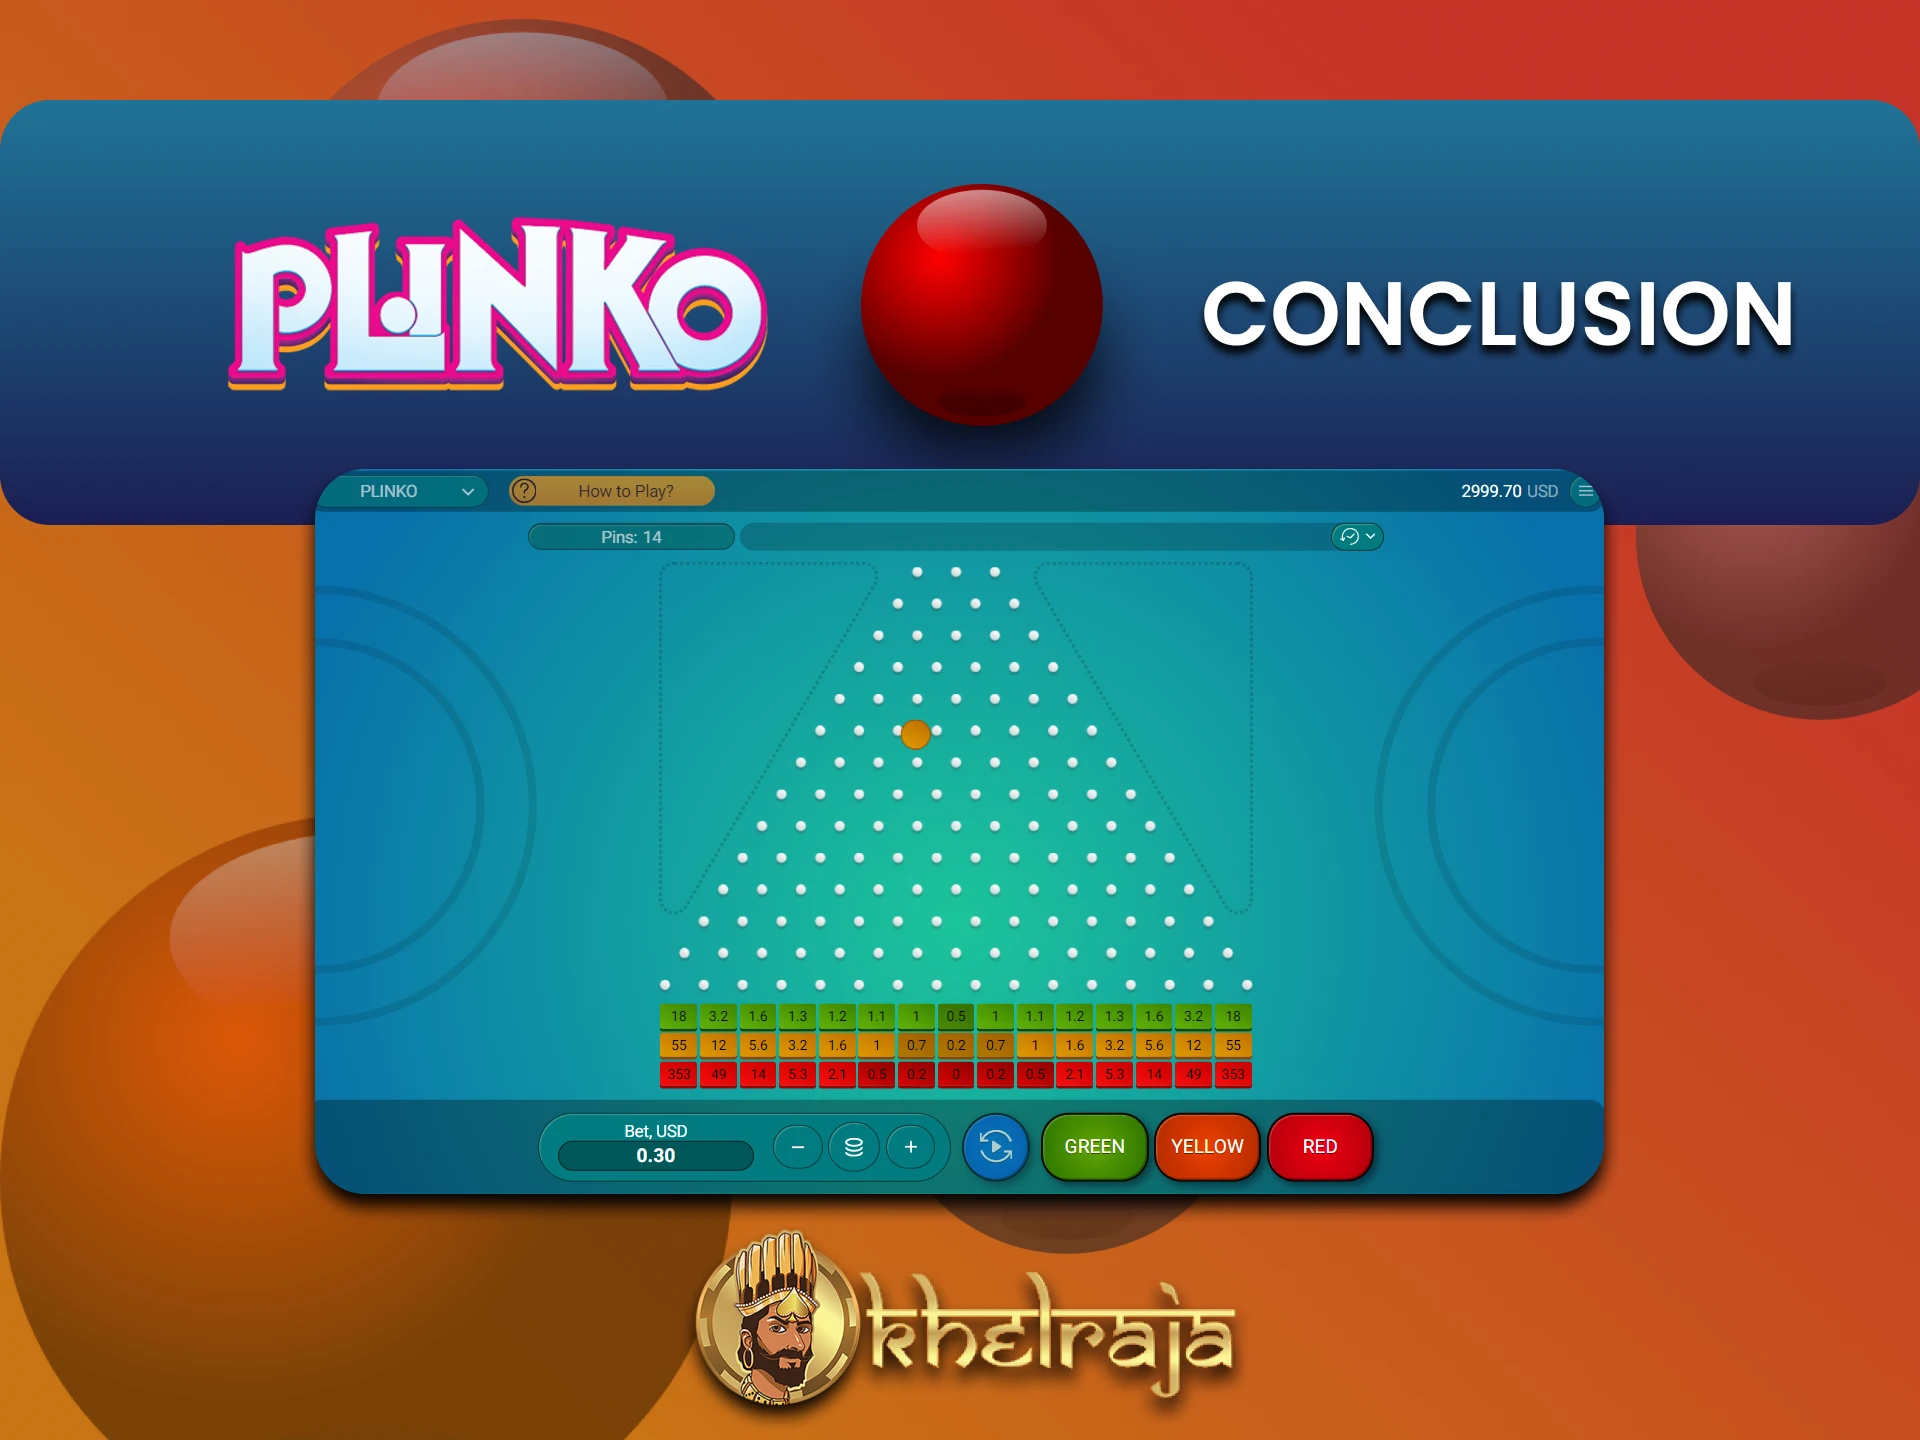 Khelraja is the right choice for Plinko.